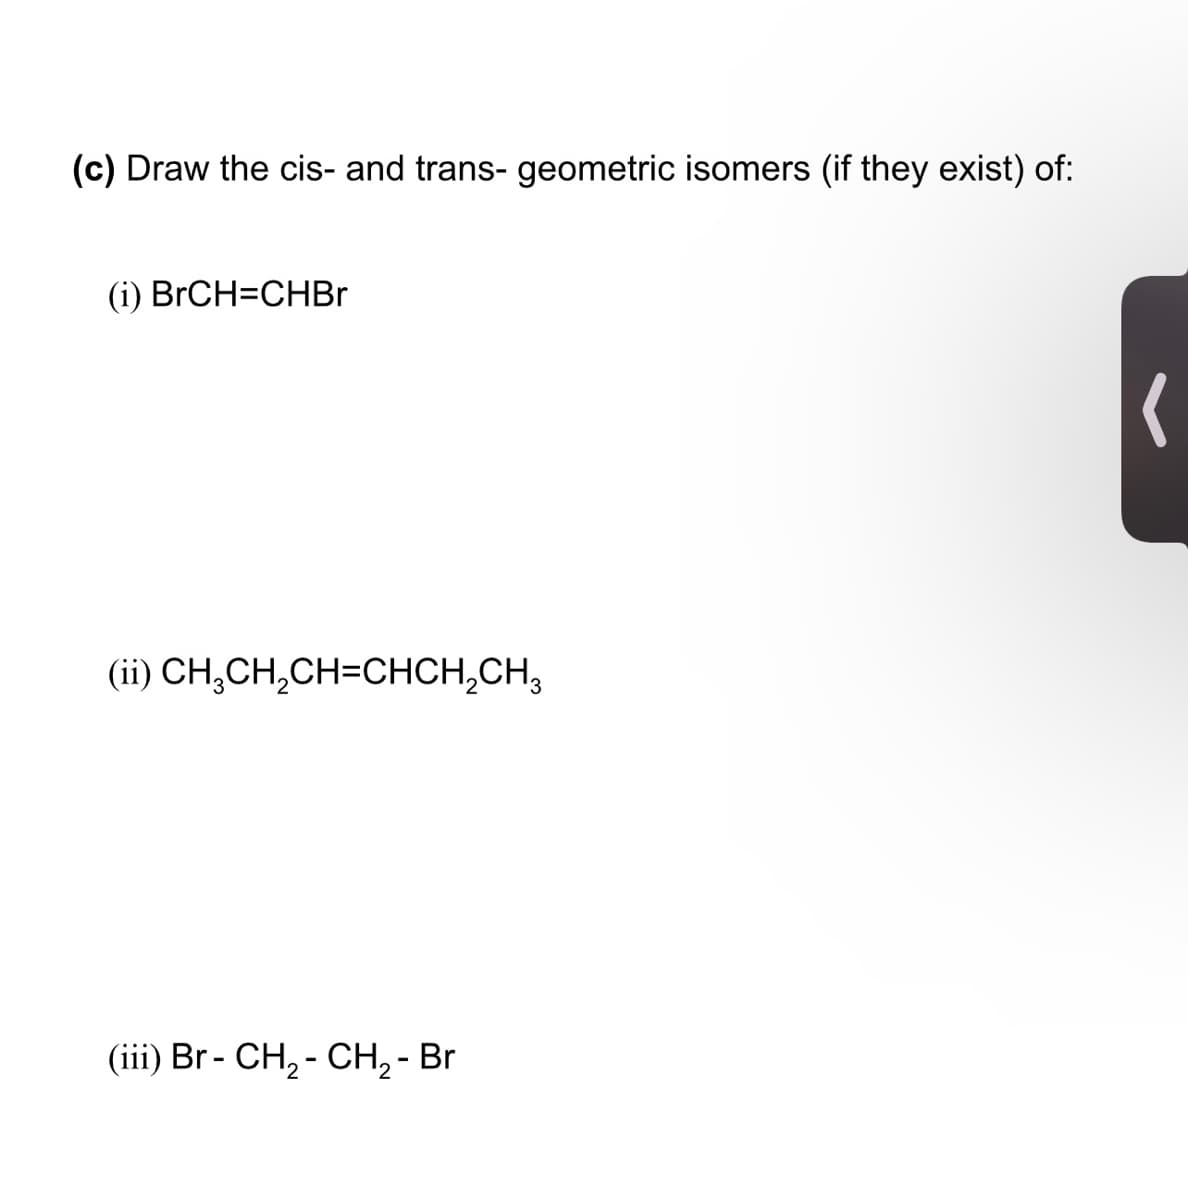 (c) Draw the cis- and trans- geometric isomers (if they exist) of:
(i) BrCH=CHBR
(ii) CH,CH,CH=CHCH,CH,
(iii) Br - CH, - CH, - Br
